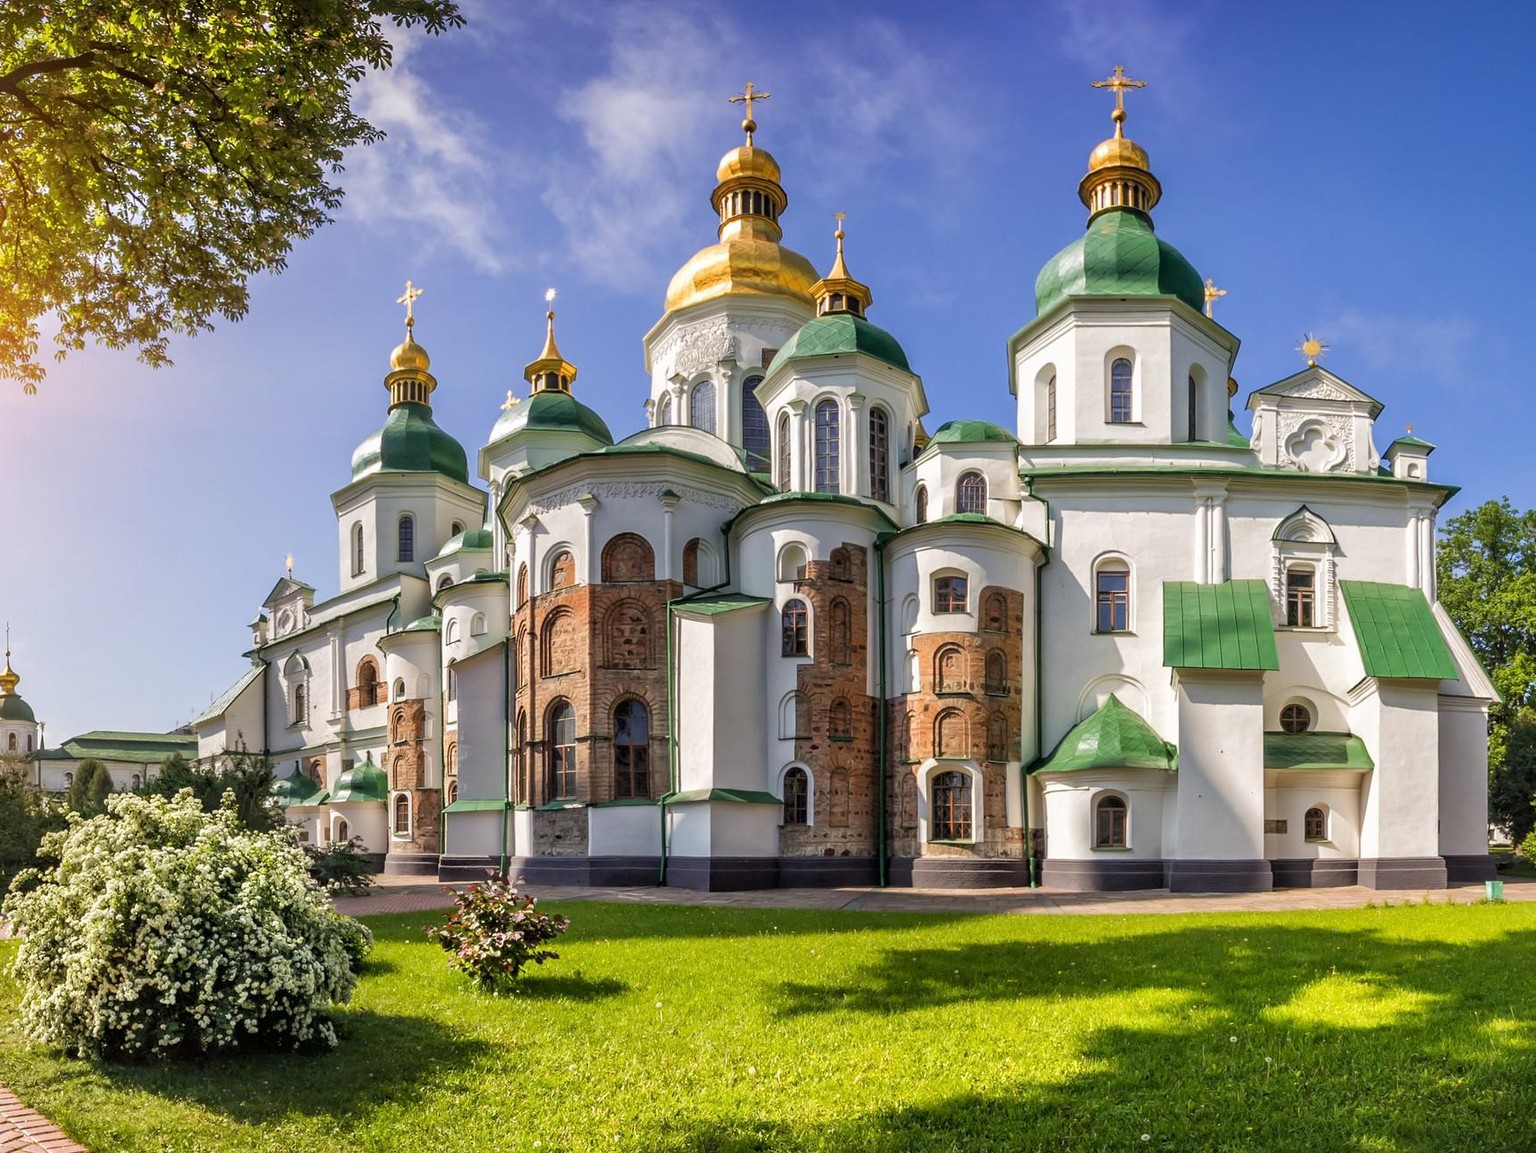 in Kiew Sophienkathedrale
Saint Sophia Cathedral in Kiev in a bright sunny summer morning